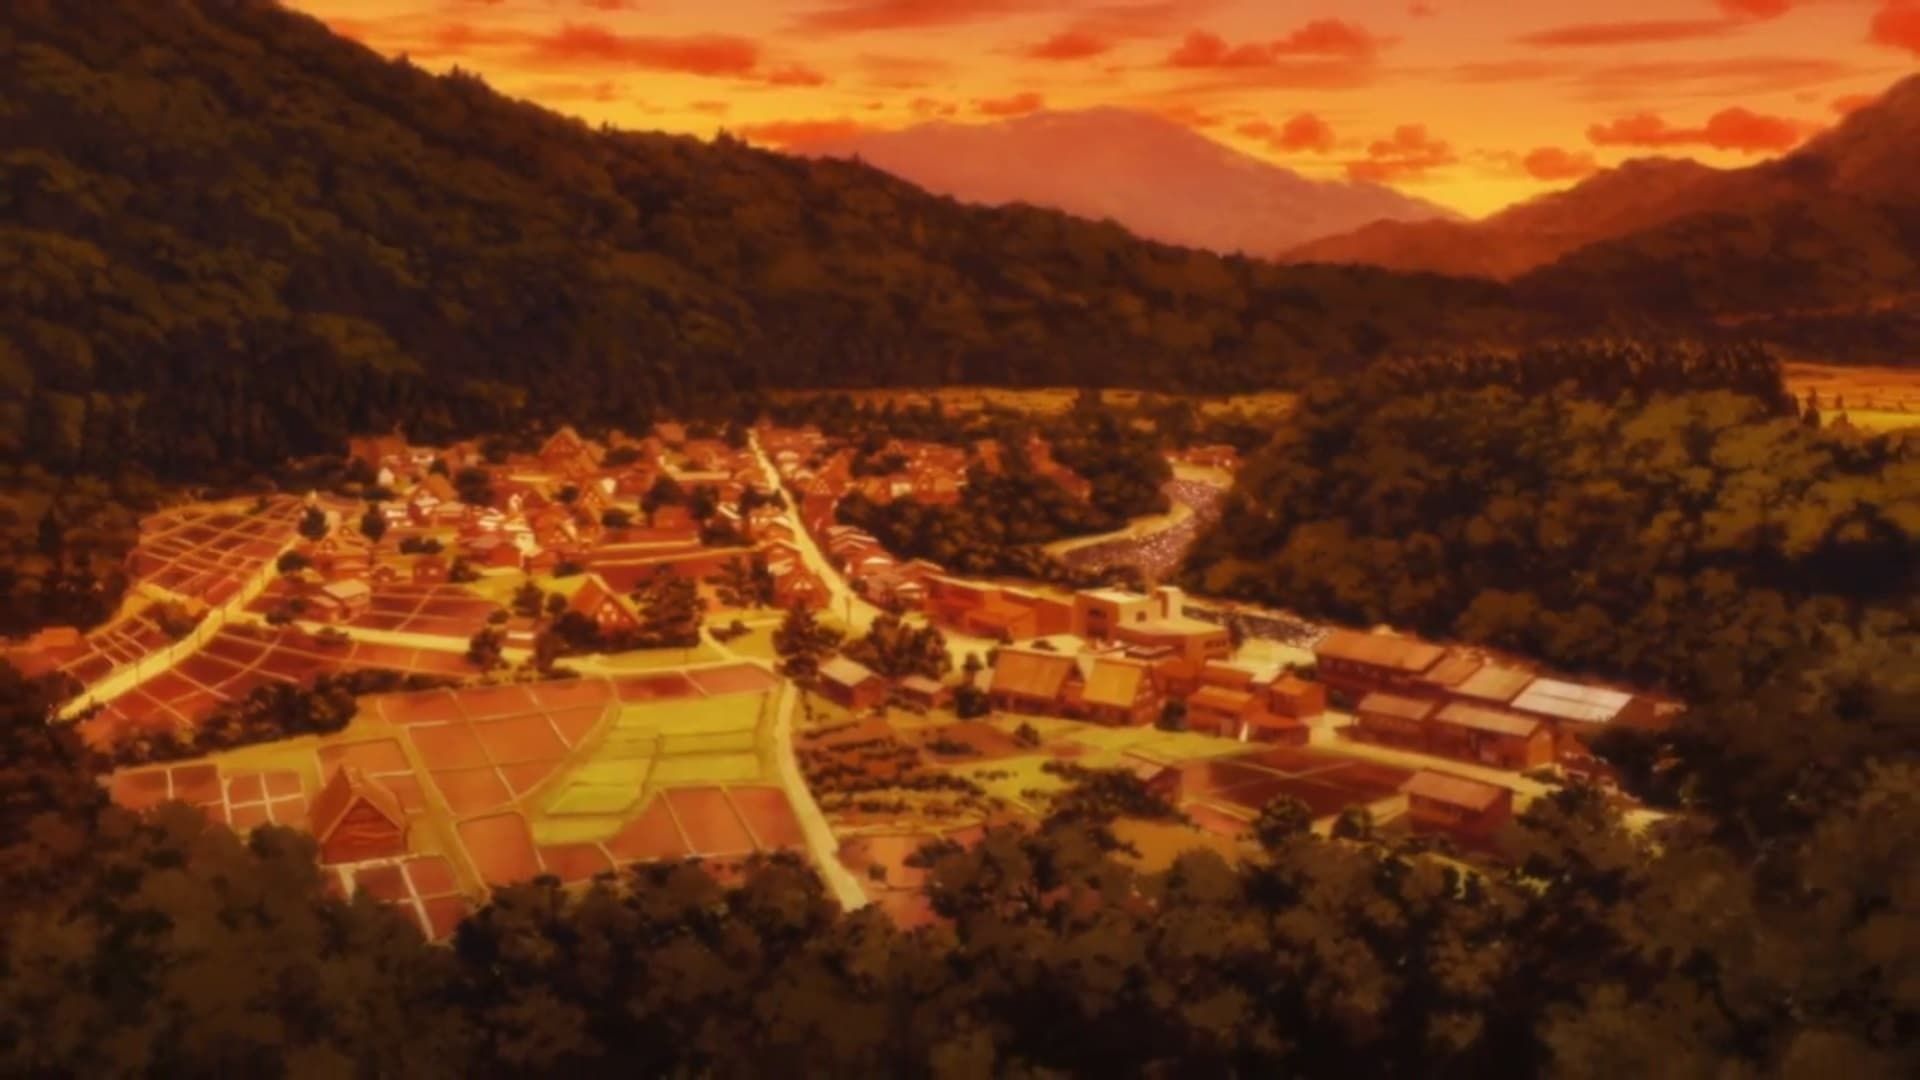 Higurashi: When They Cry - GOU background